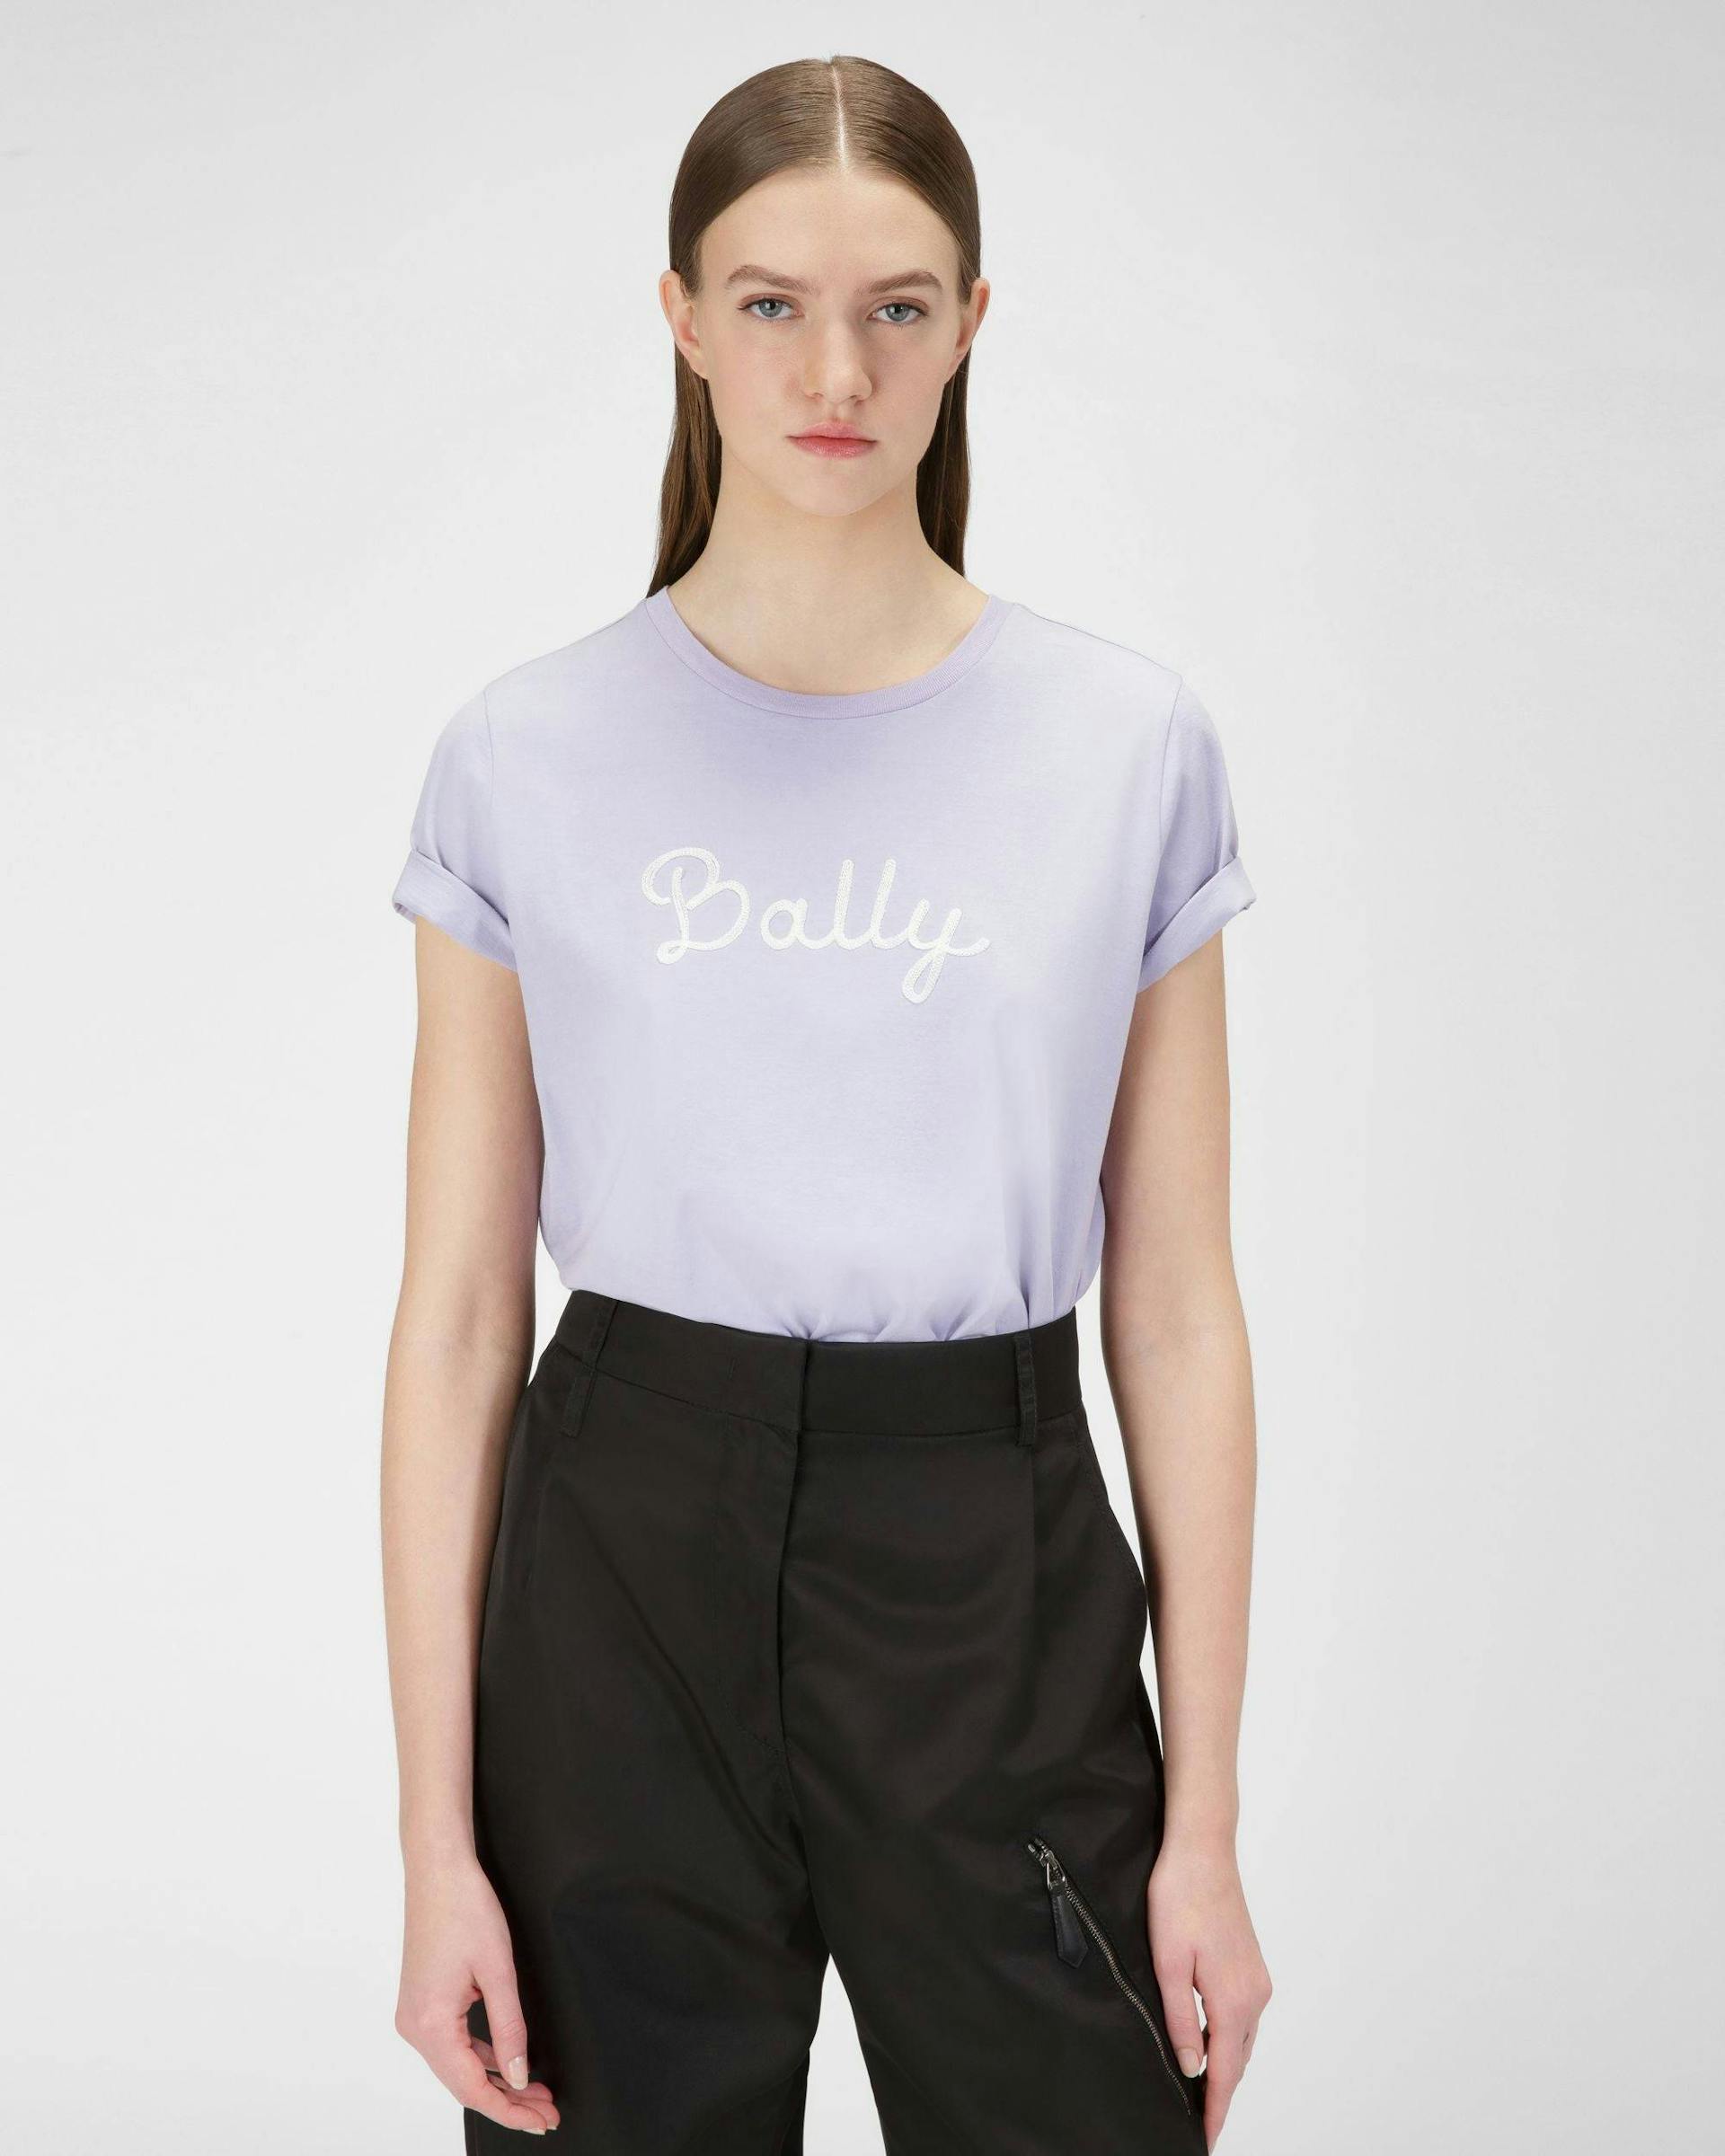 T-Shirt En Coton Violet - Femme - Bally - 01